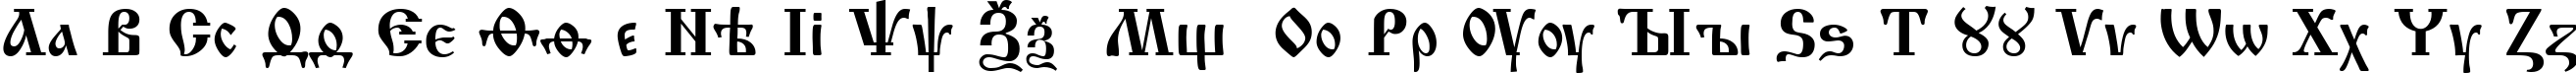 Пример написания английского алфавита шрифтом Izhitsa